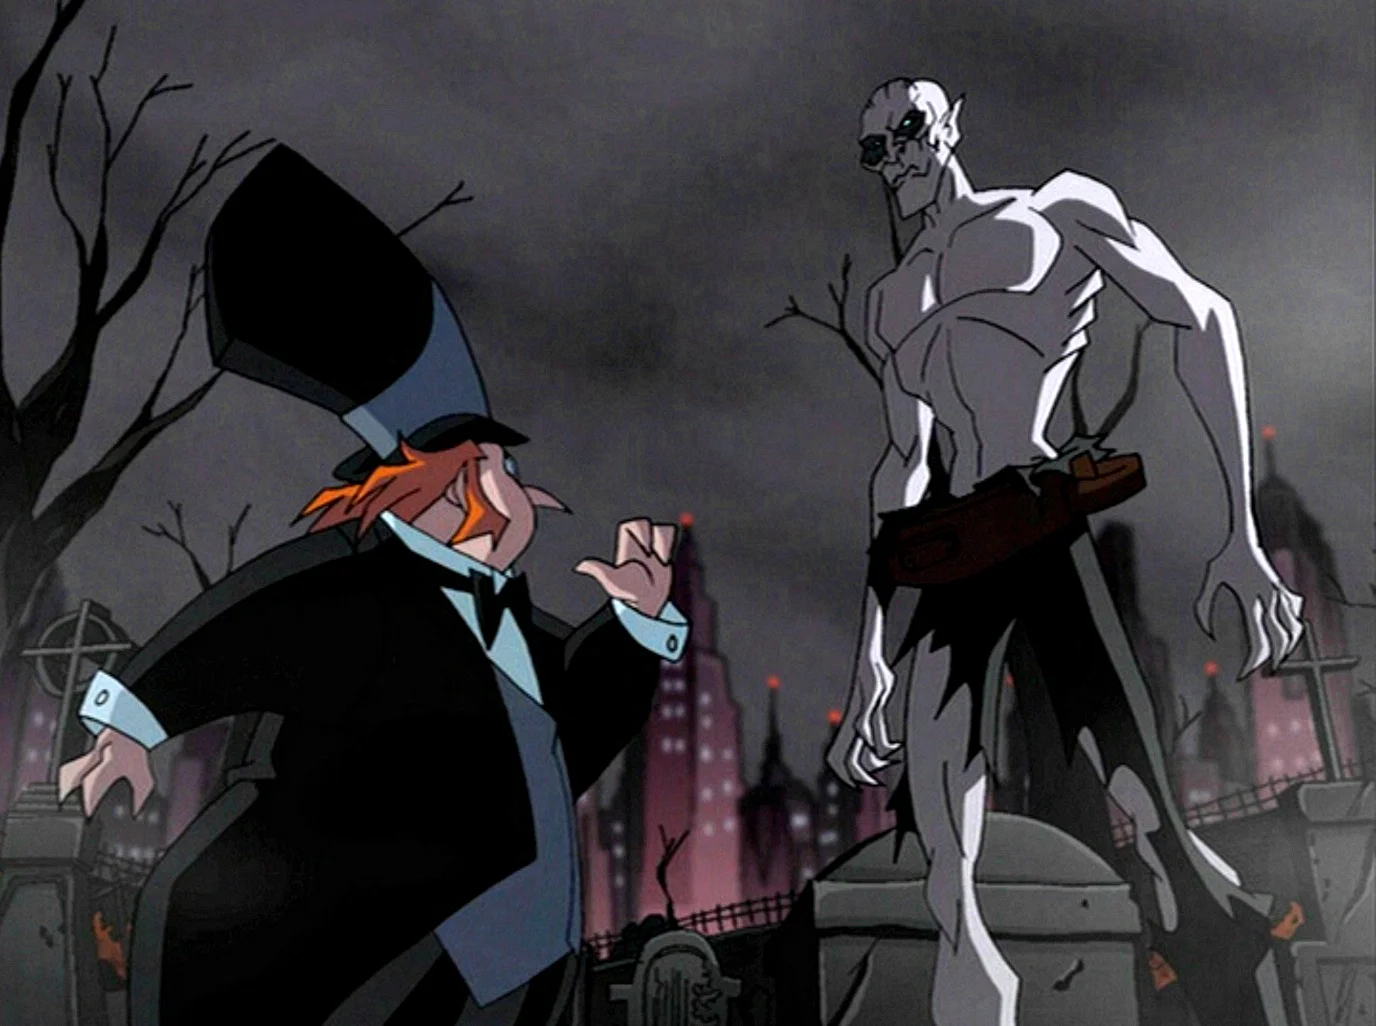 Бэтмен против Дракулы 2005